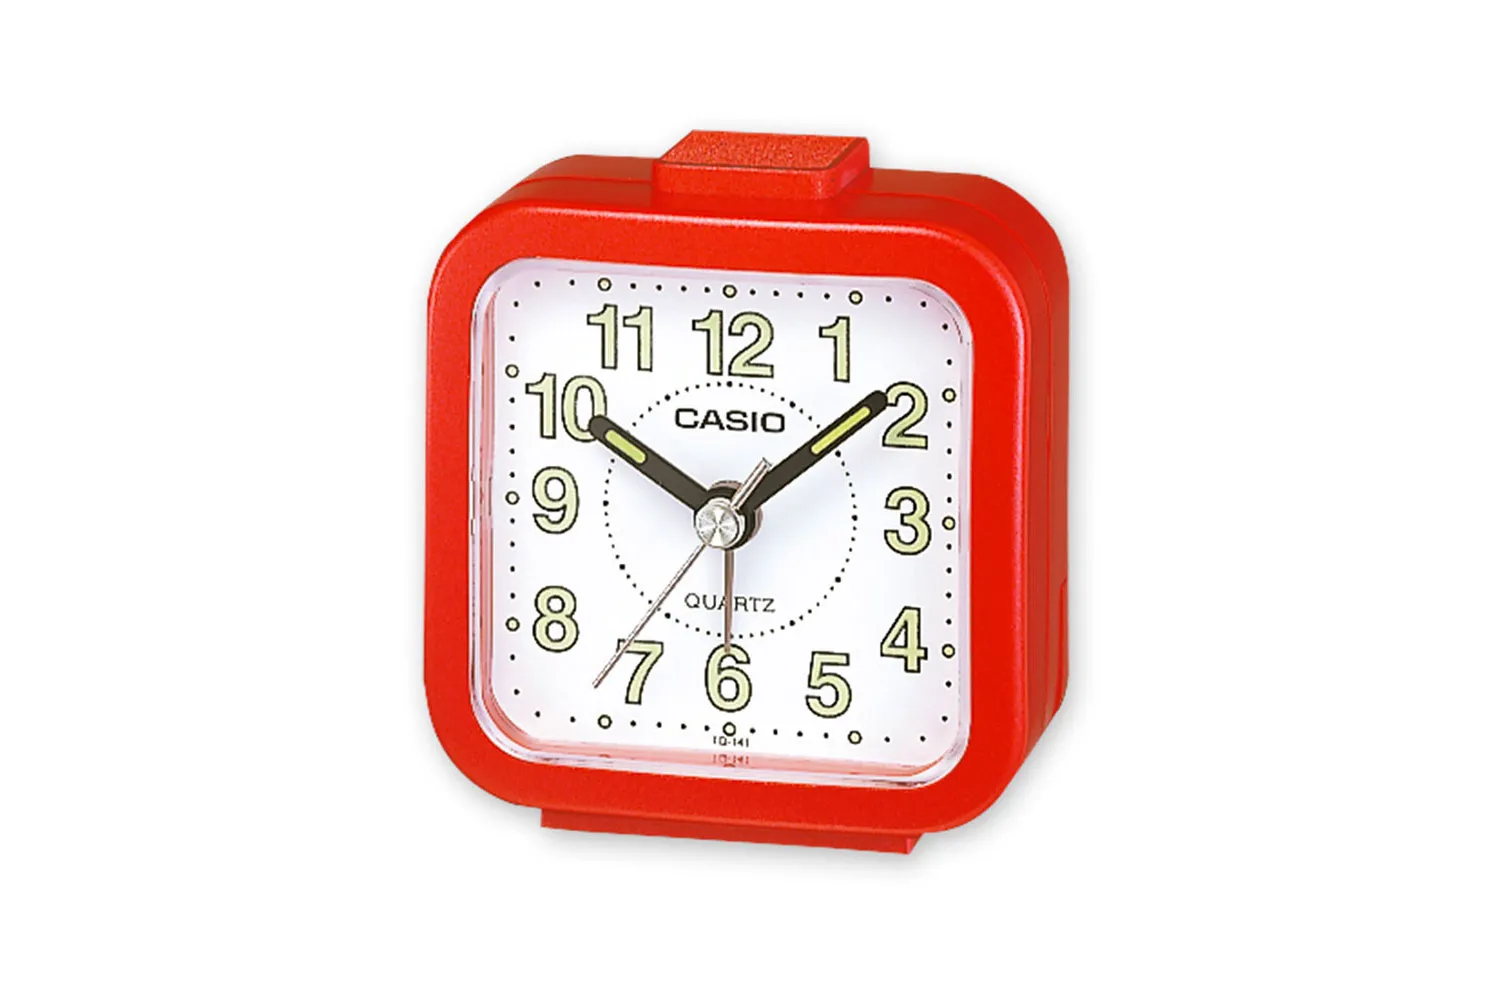 Uhr CASIO Clocks tq-141-4ef